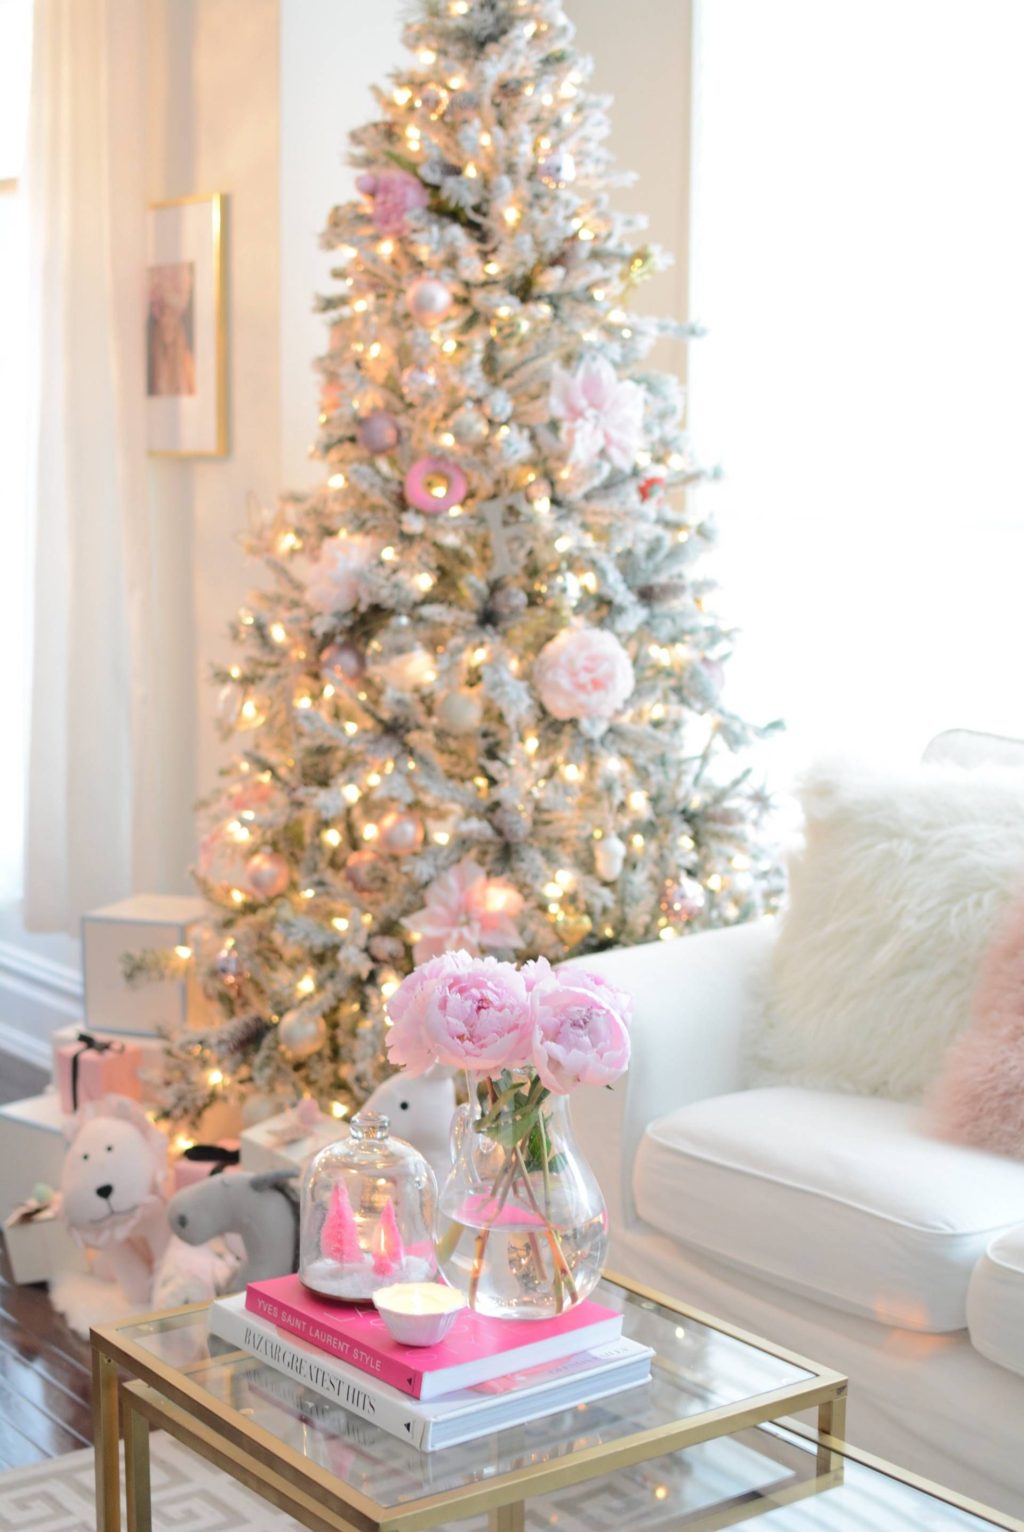 50+ Top Christmas Tree Decoration Ideas